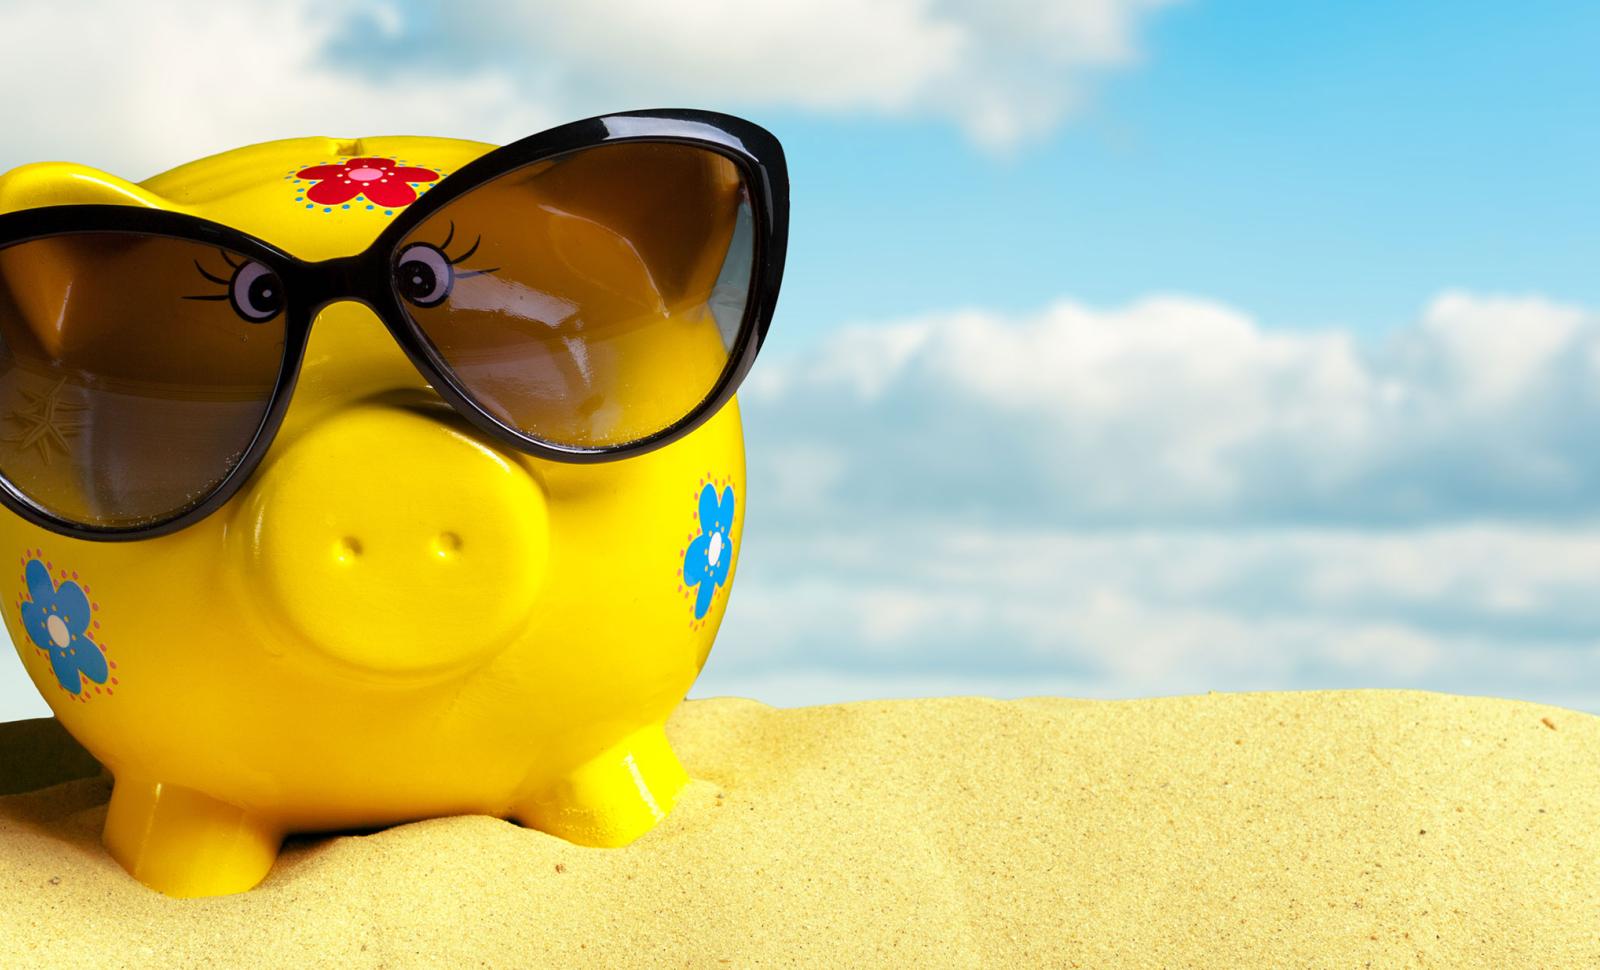 Piggy bank on the beach wearing sunglasses